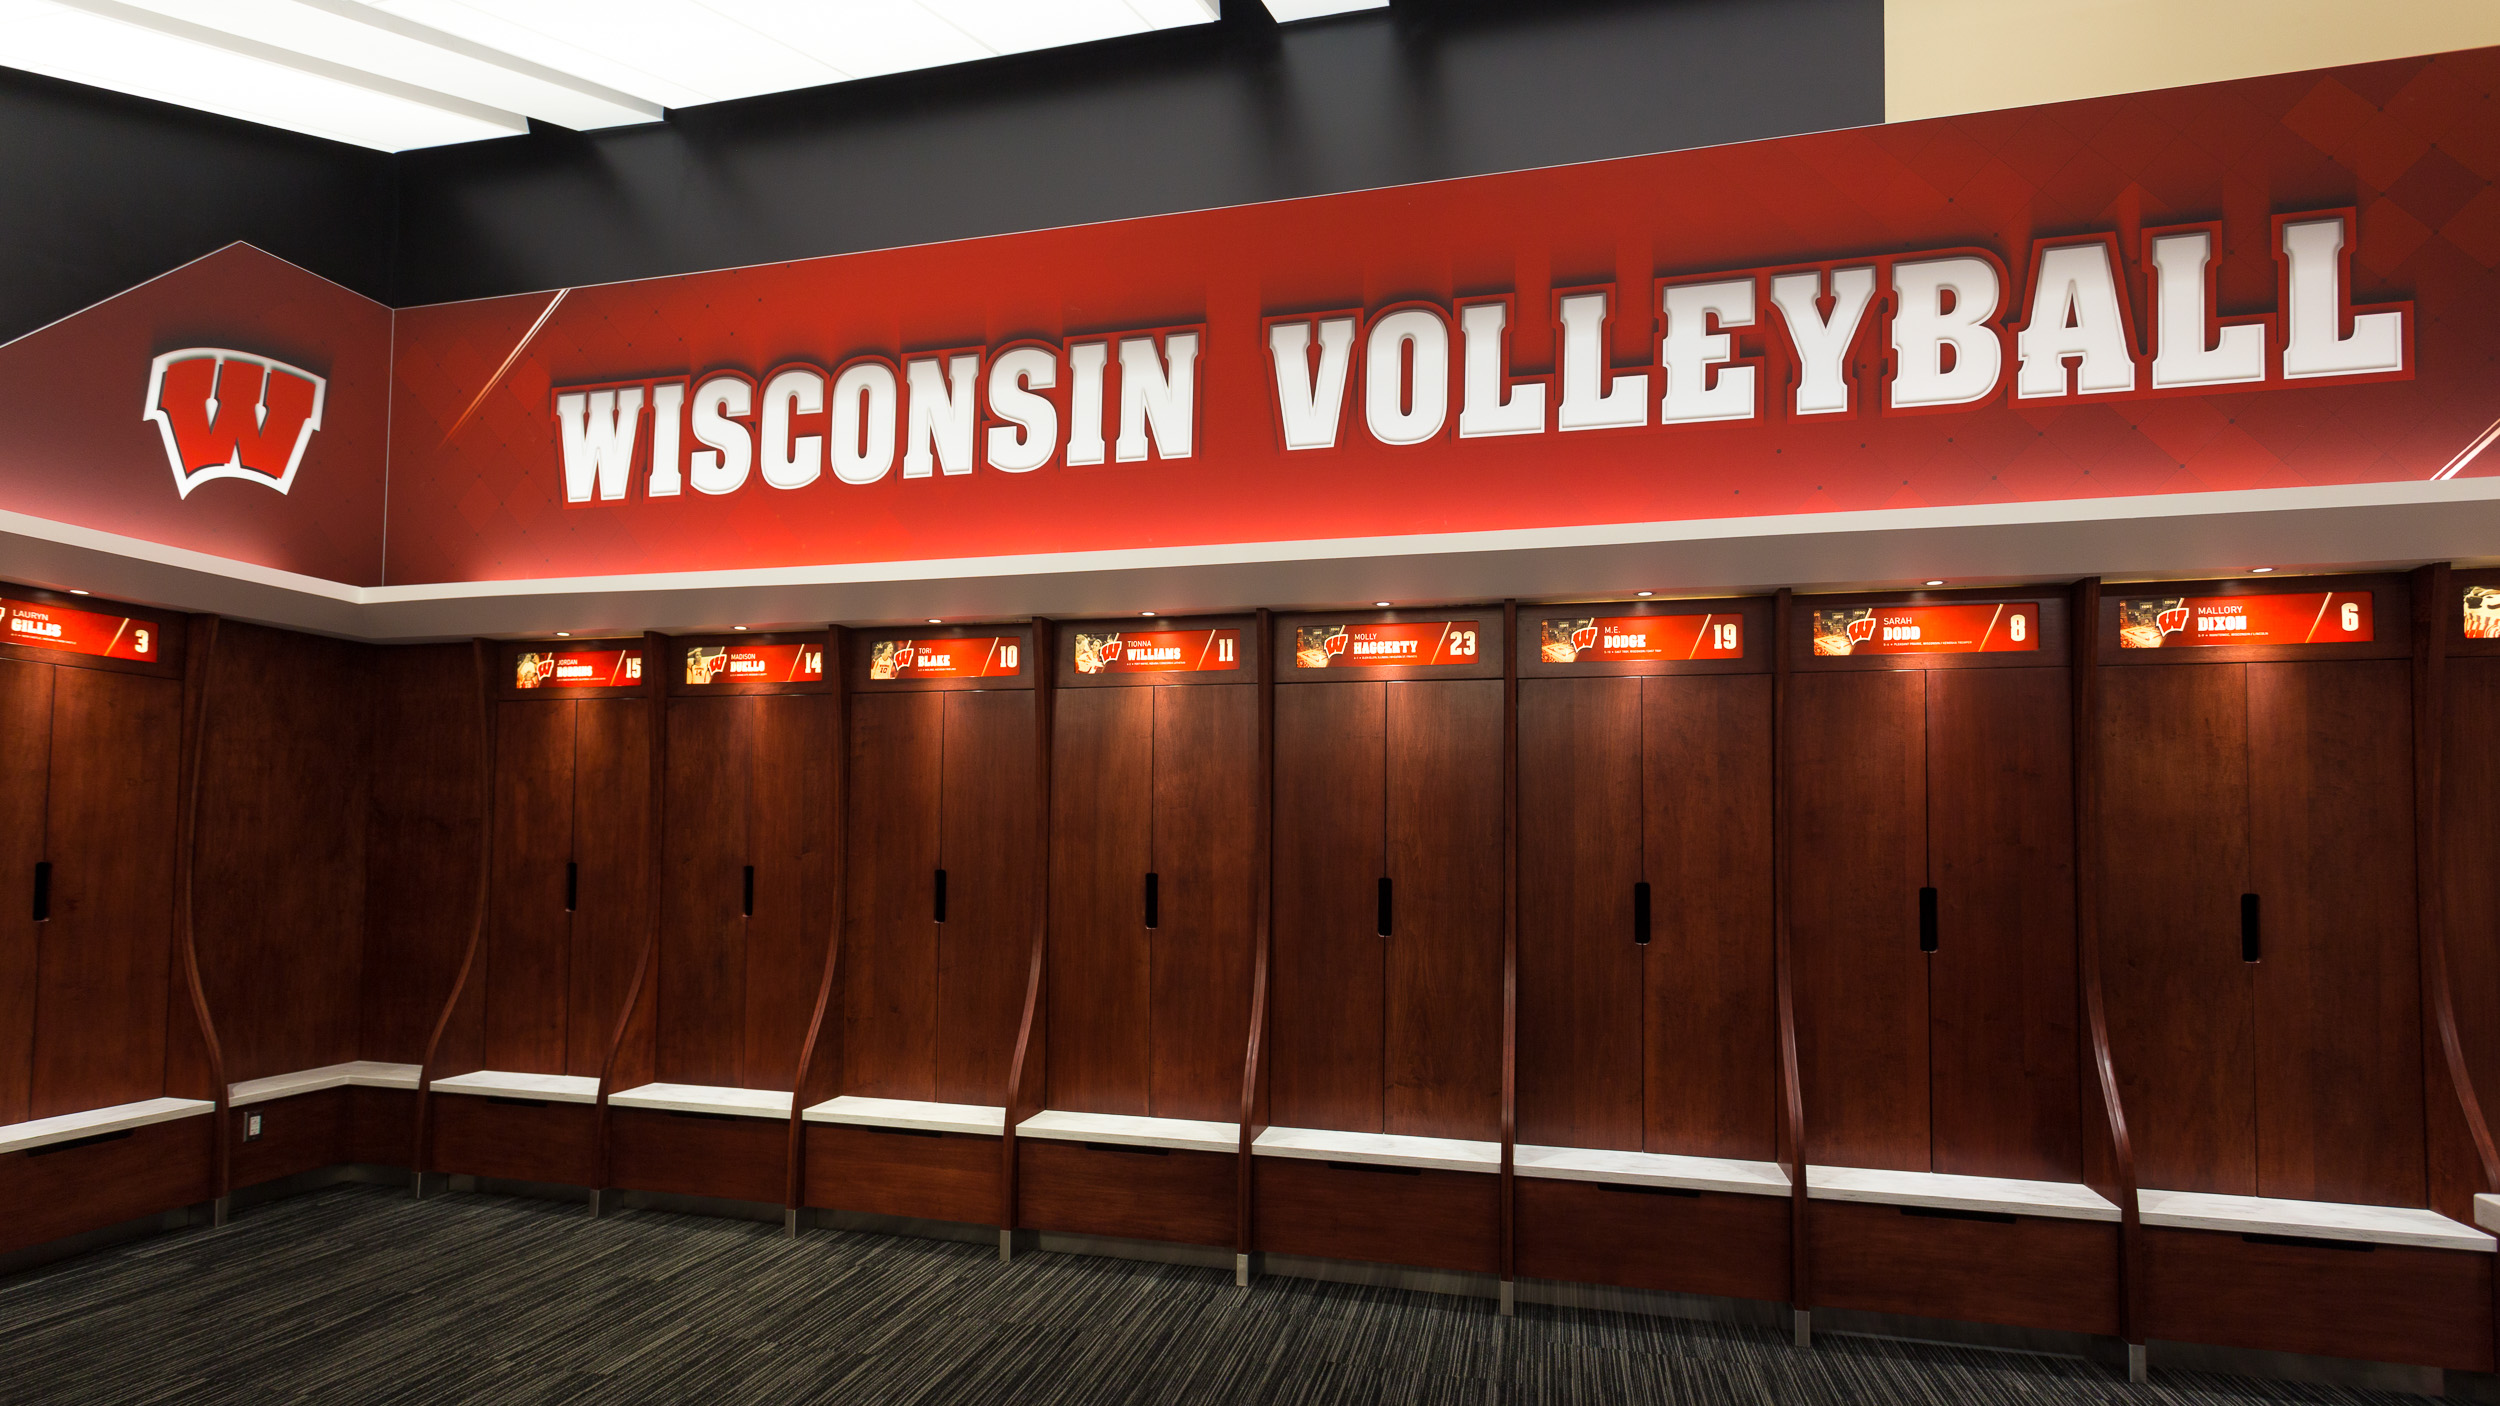 University of Wisconsin - Volleyball Lockers Branding SEG Frame